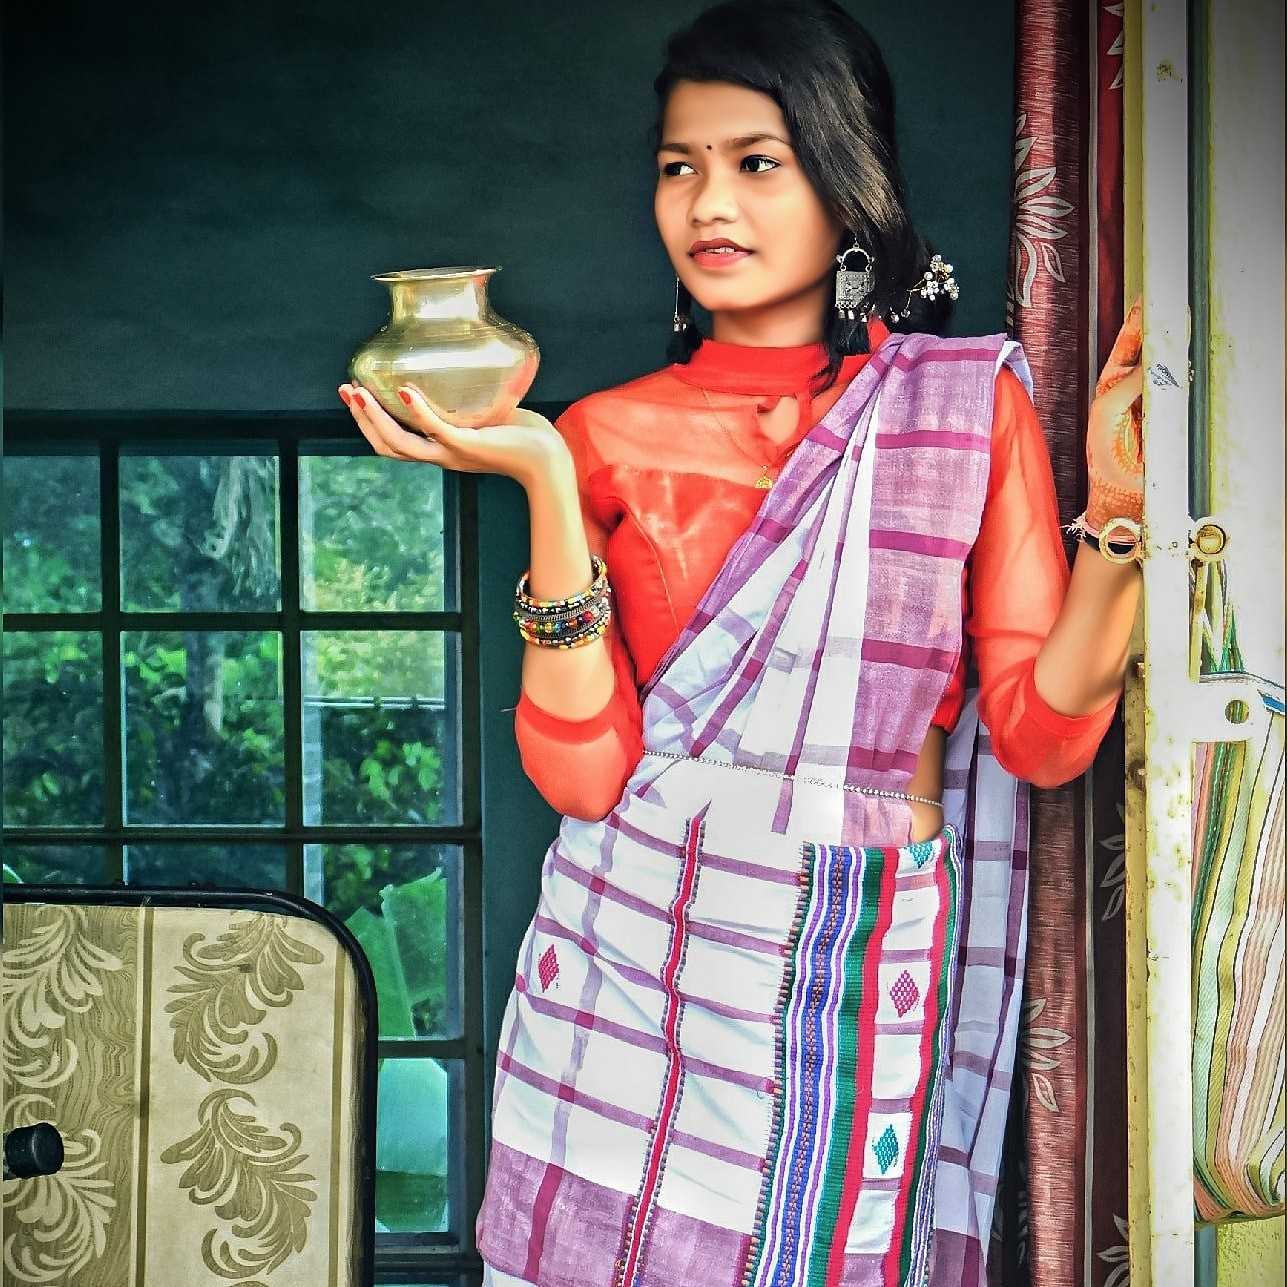 Santal Pargana - santal_pargana Model #Jharkhand #santali #santal #santhal # santhali #santalikuli #fashionable #lovely #beautiful #nature #model #edit  #photography #picoftheday #newpic #like4like #follw4follw #doubletap  #commentbelow #traditional ...